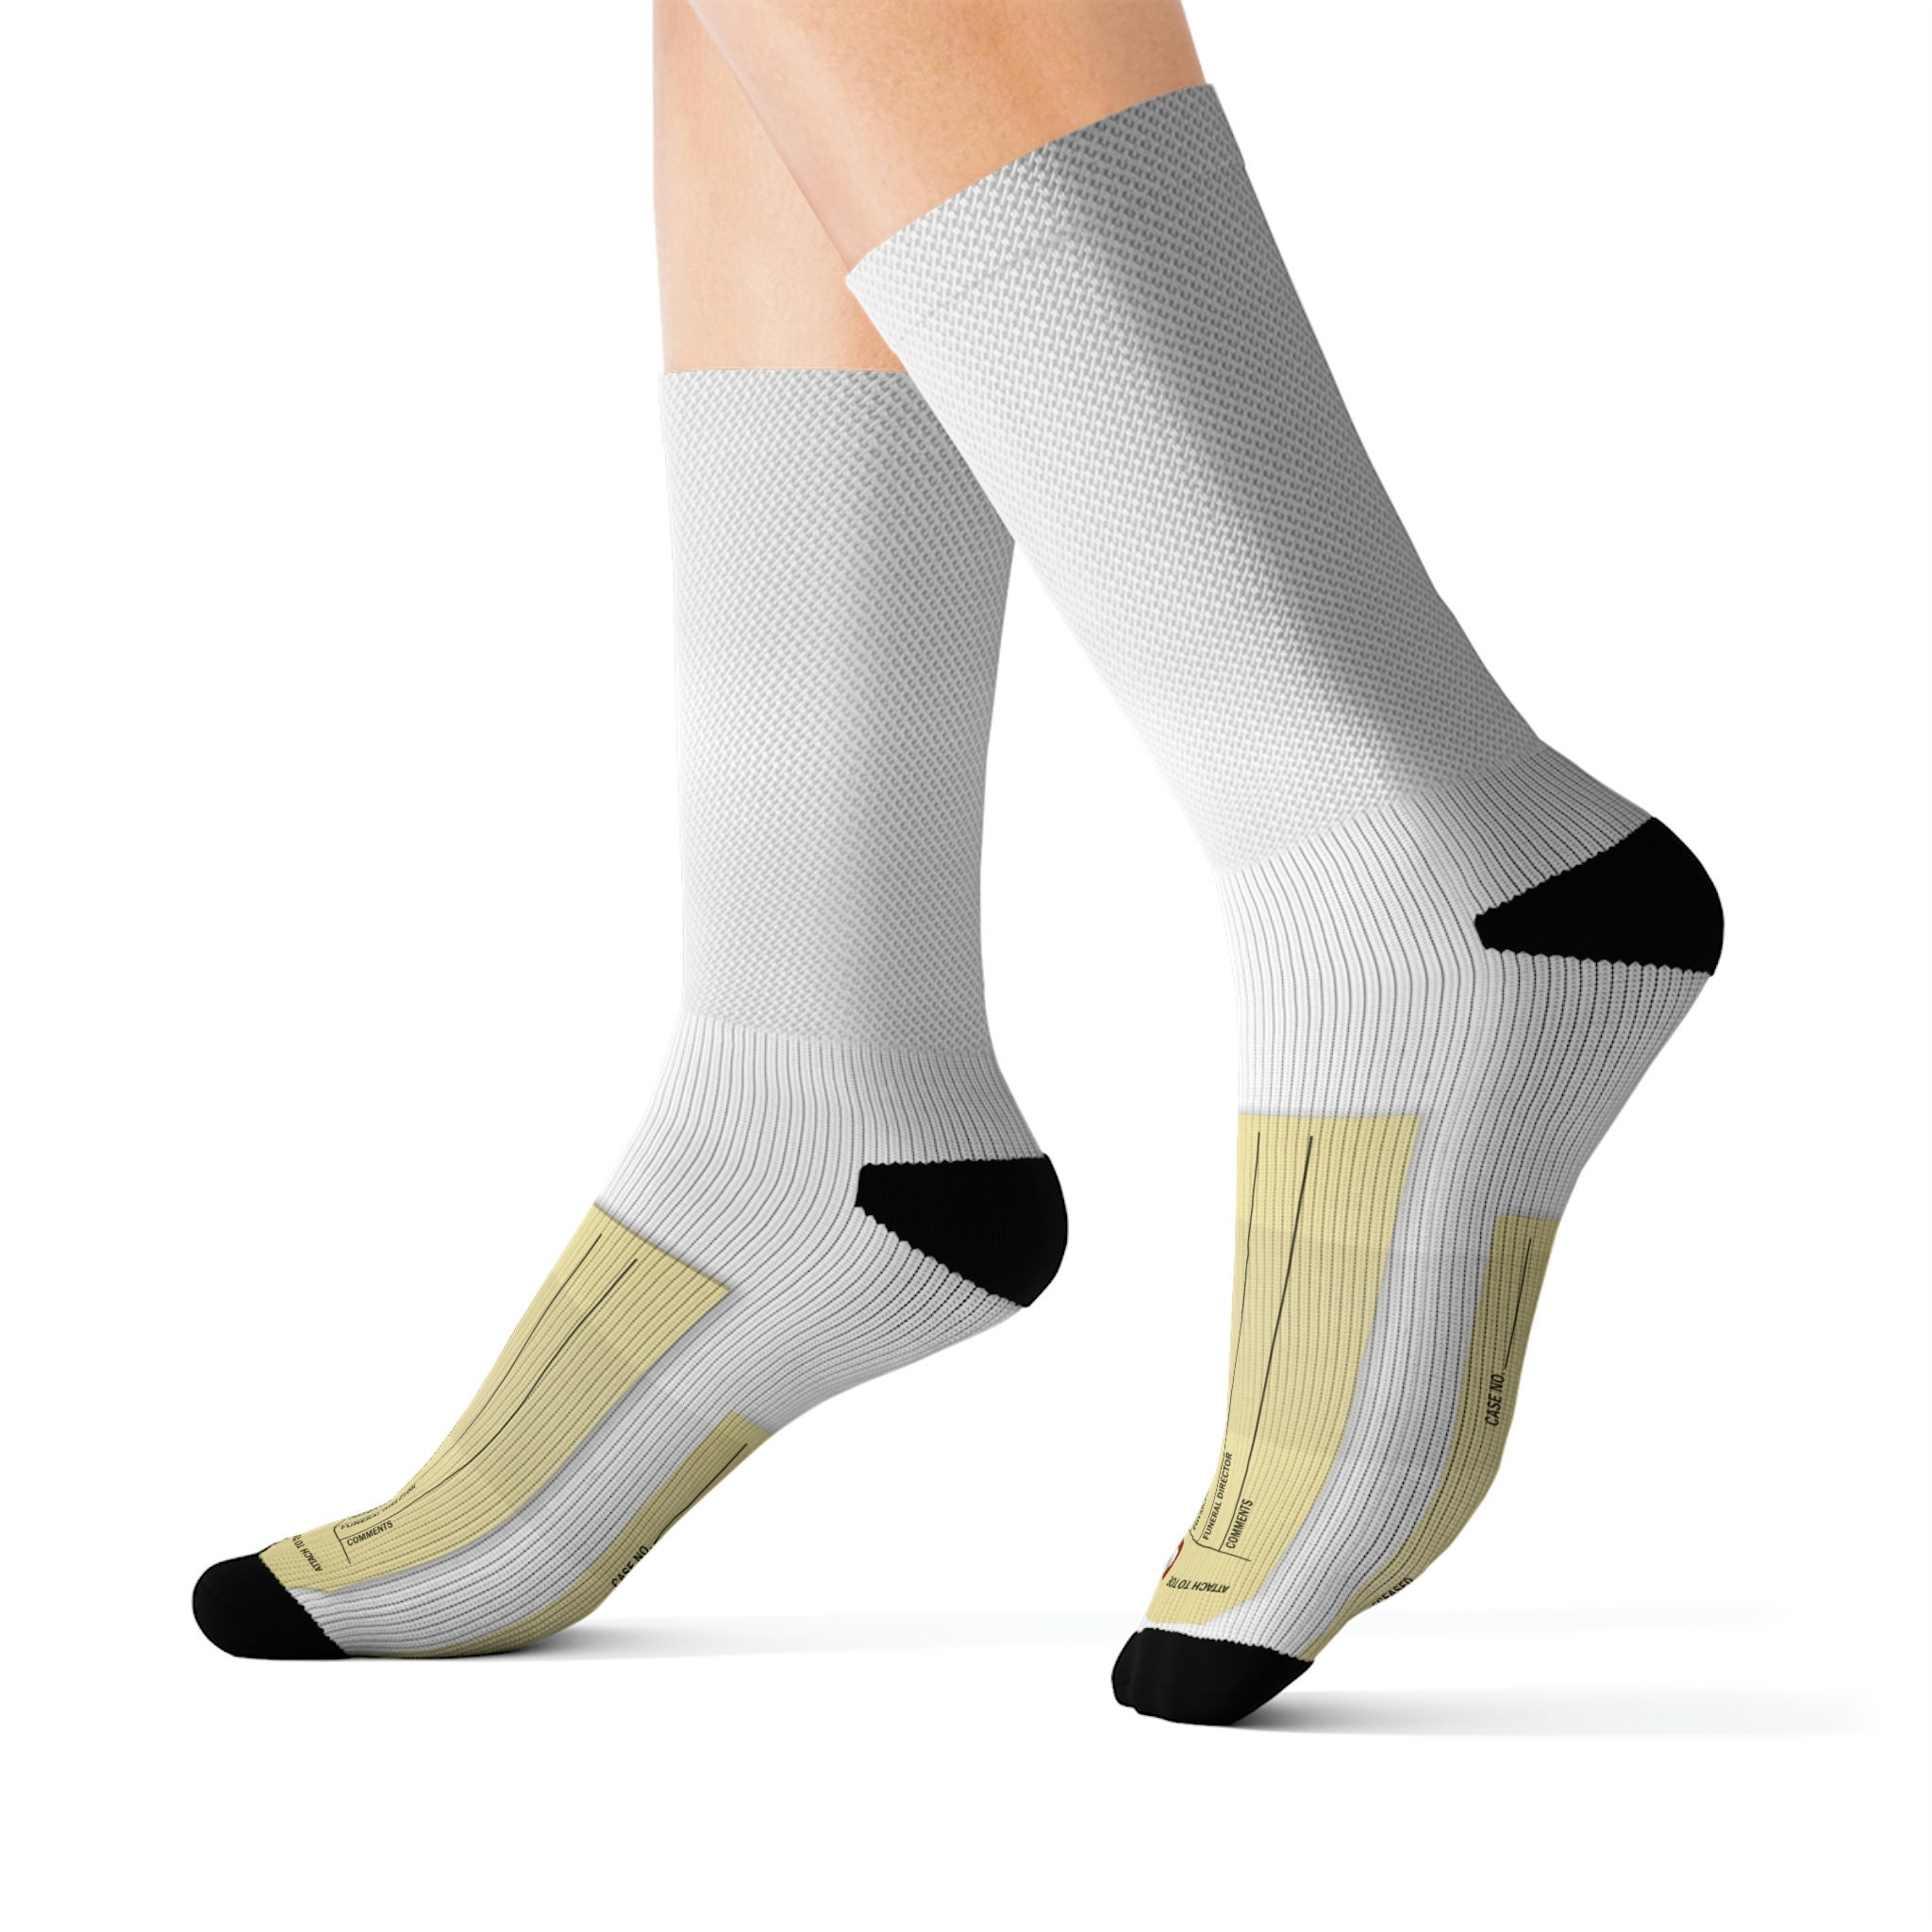 Toe Separator Socks - Bamboo Foot Alignment Socks Kuwait